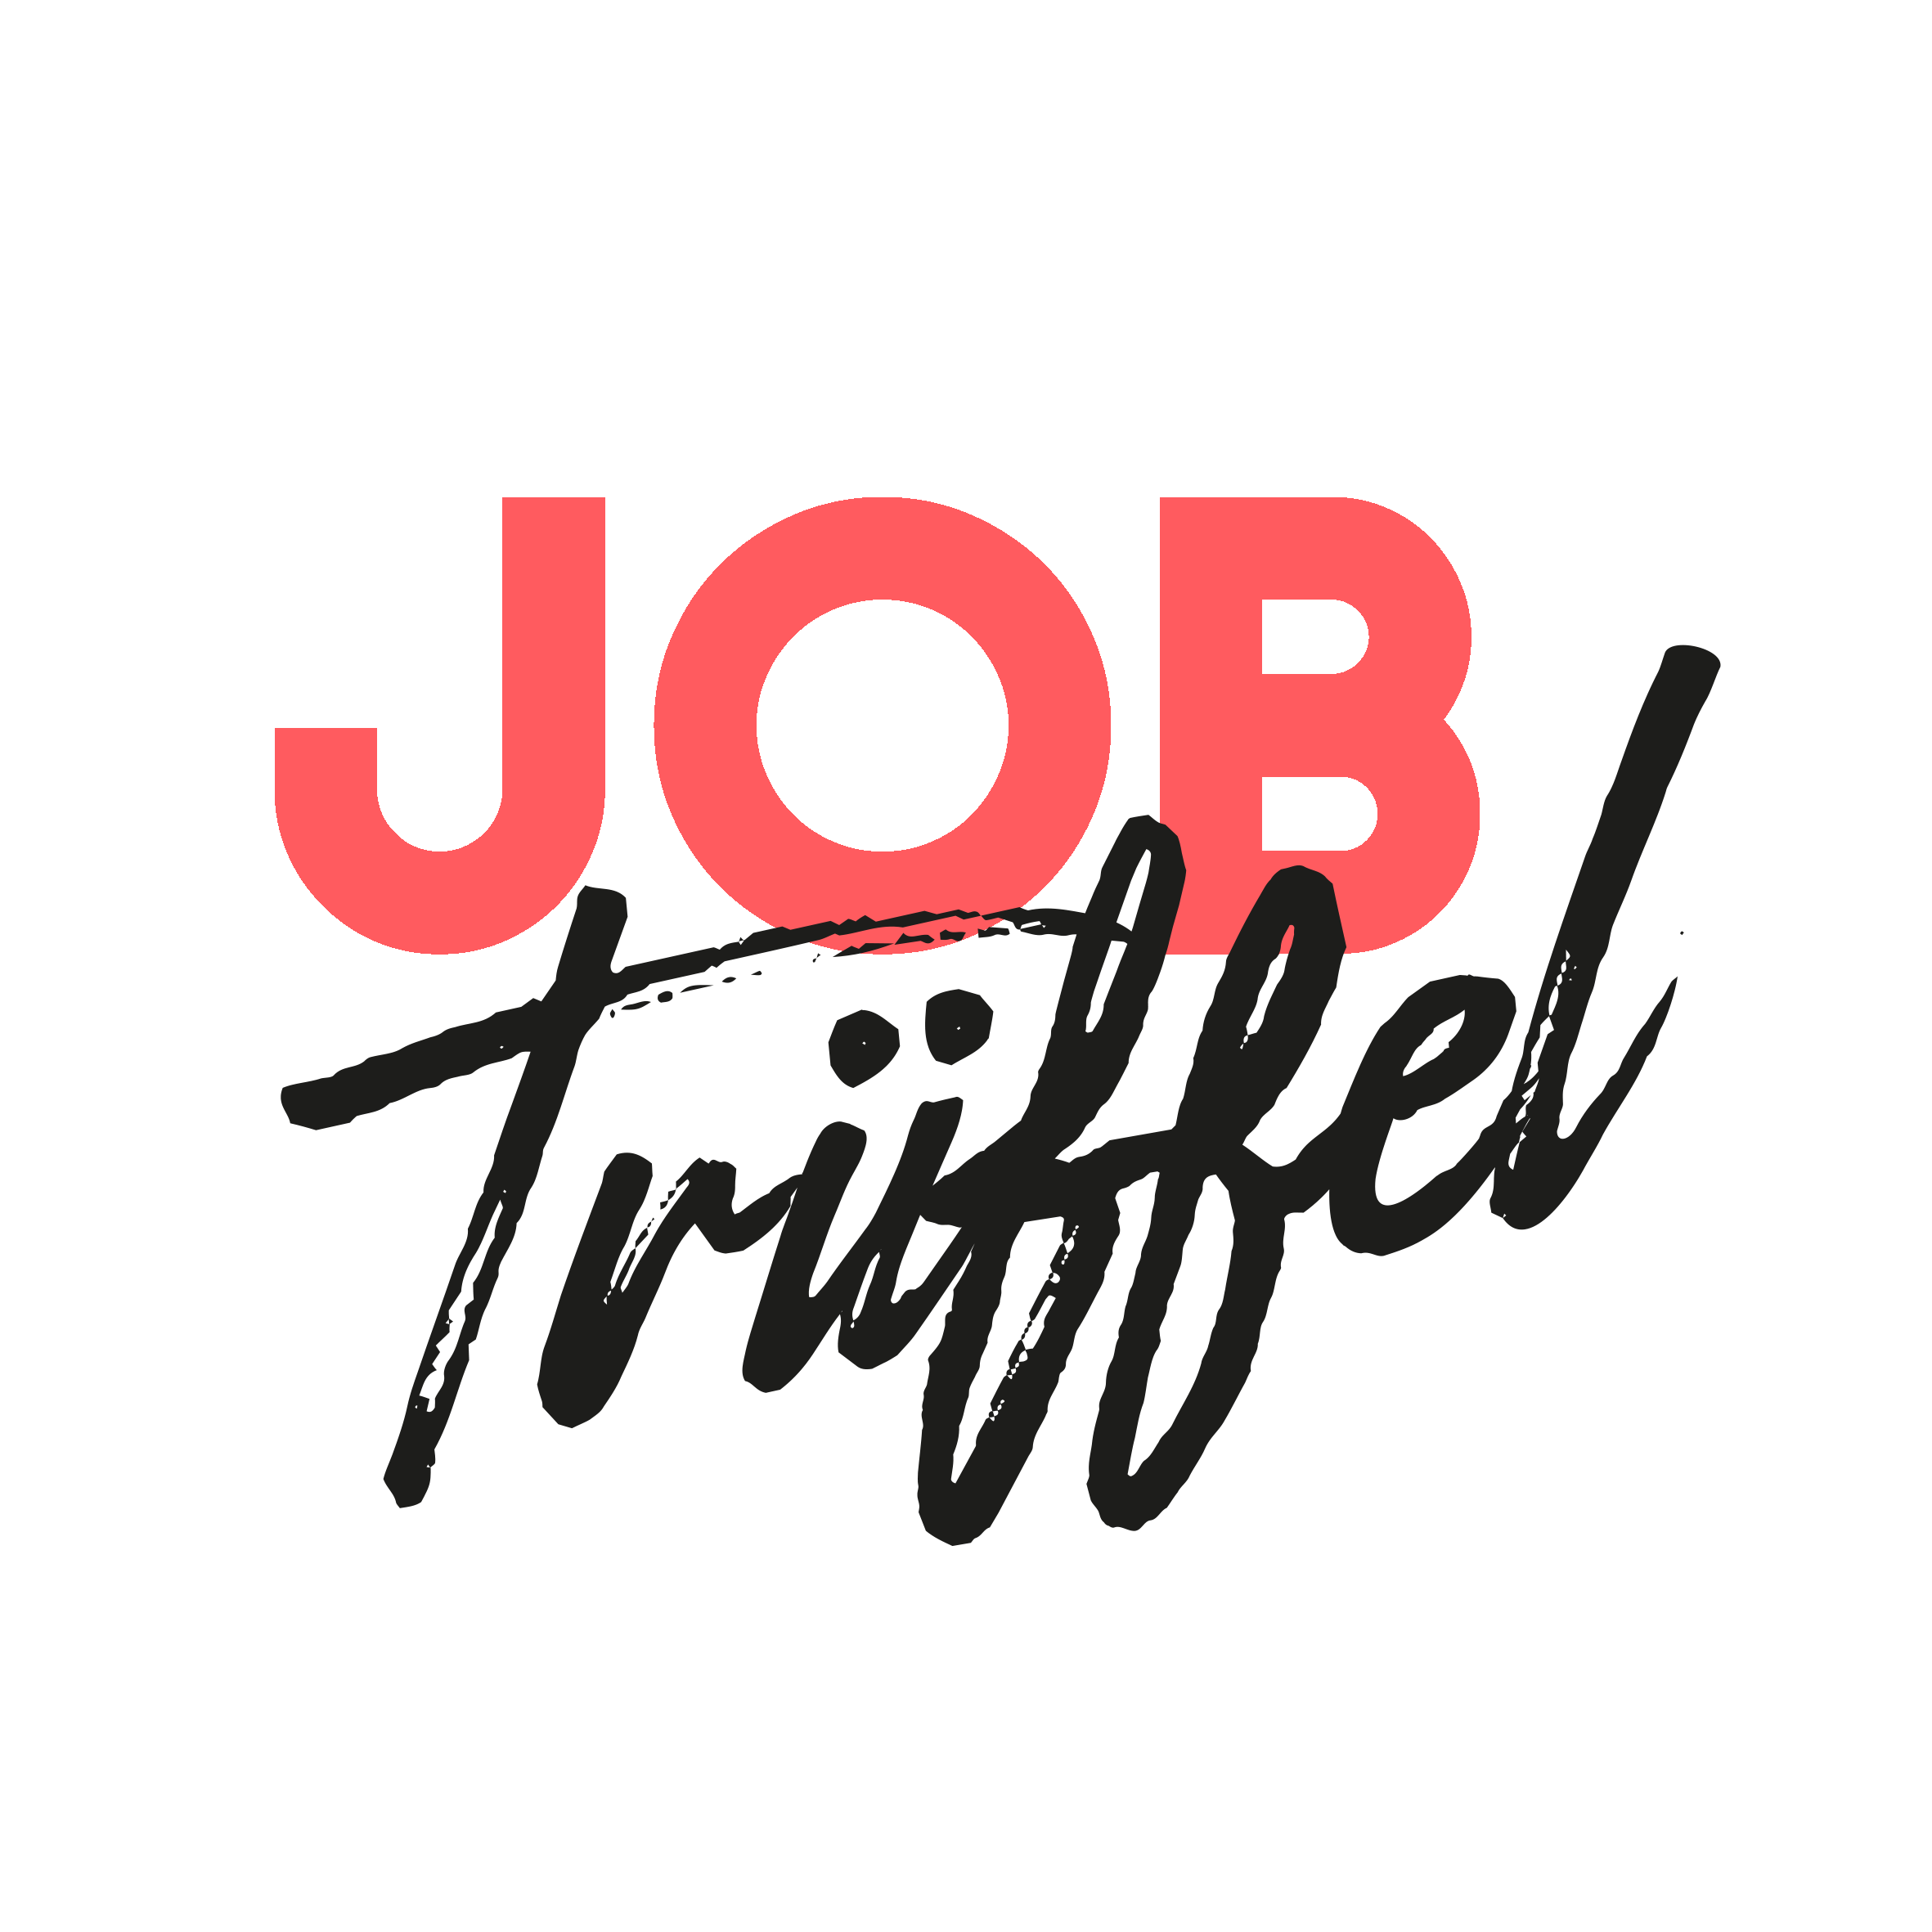 jobtrueffel-gmbh-logo